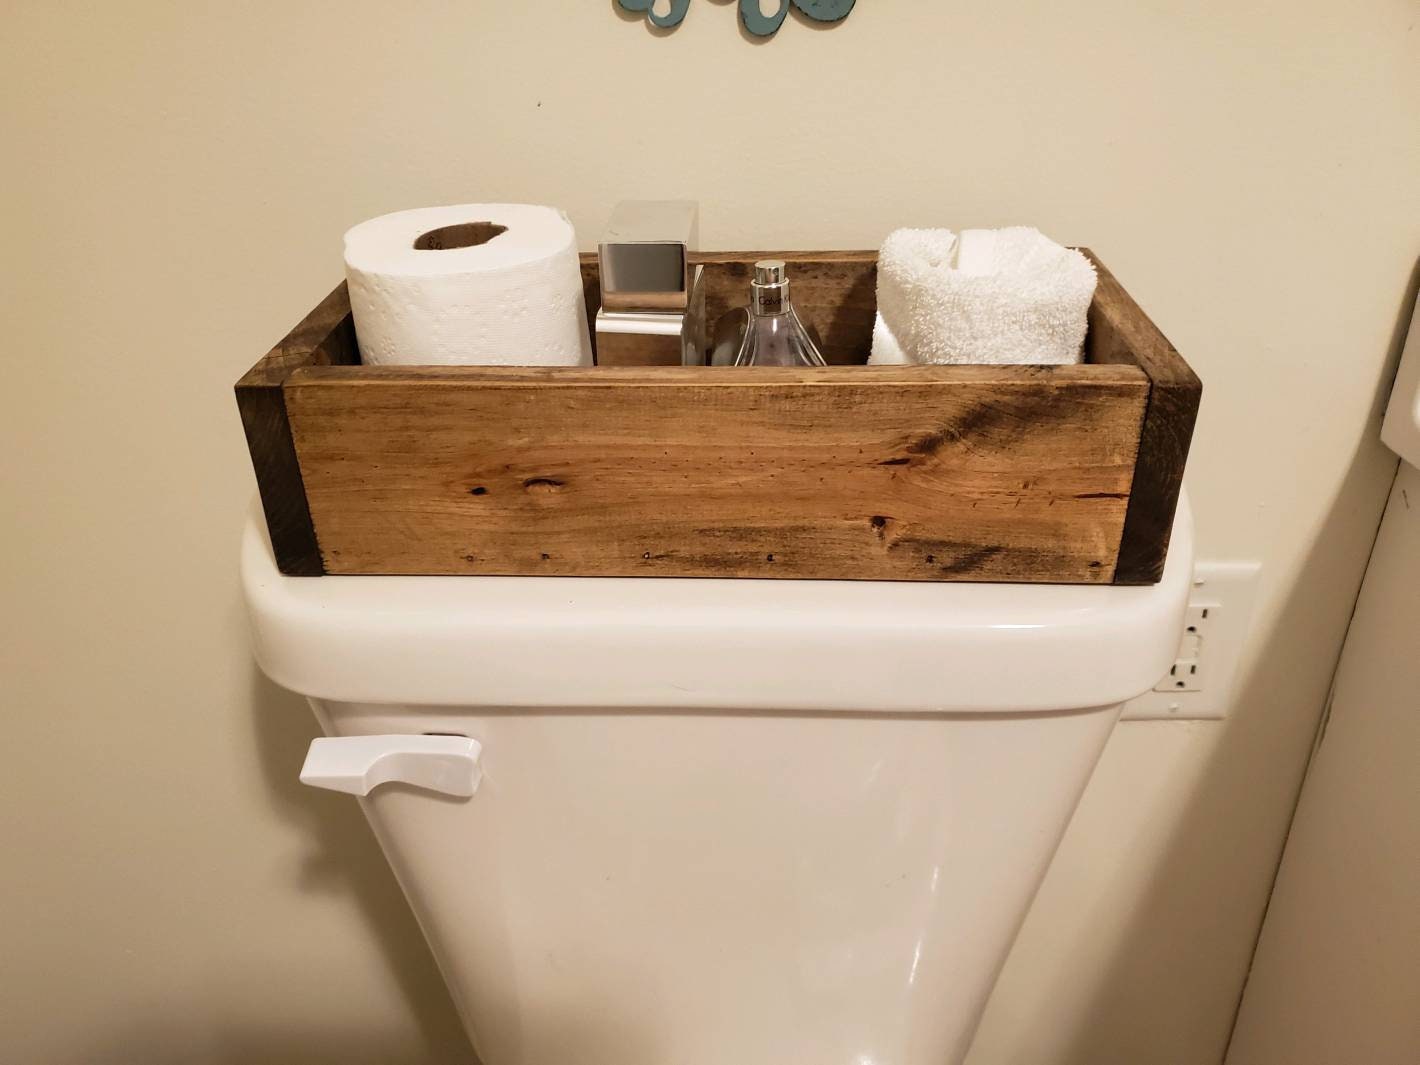 Rustic Toilet Paper Holder - Farmhouse Bathroom Decor - Wooden Box